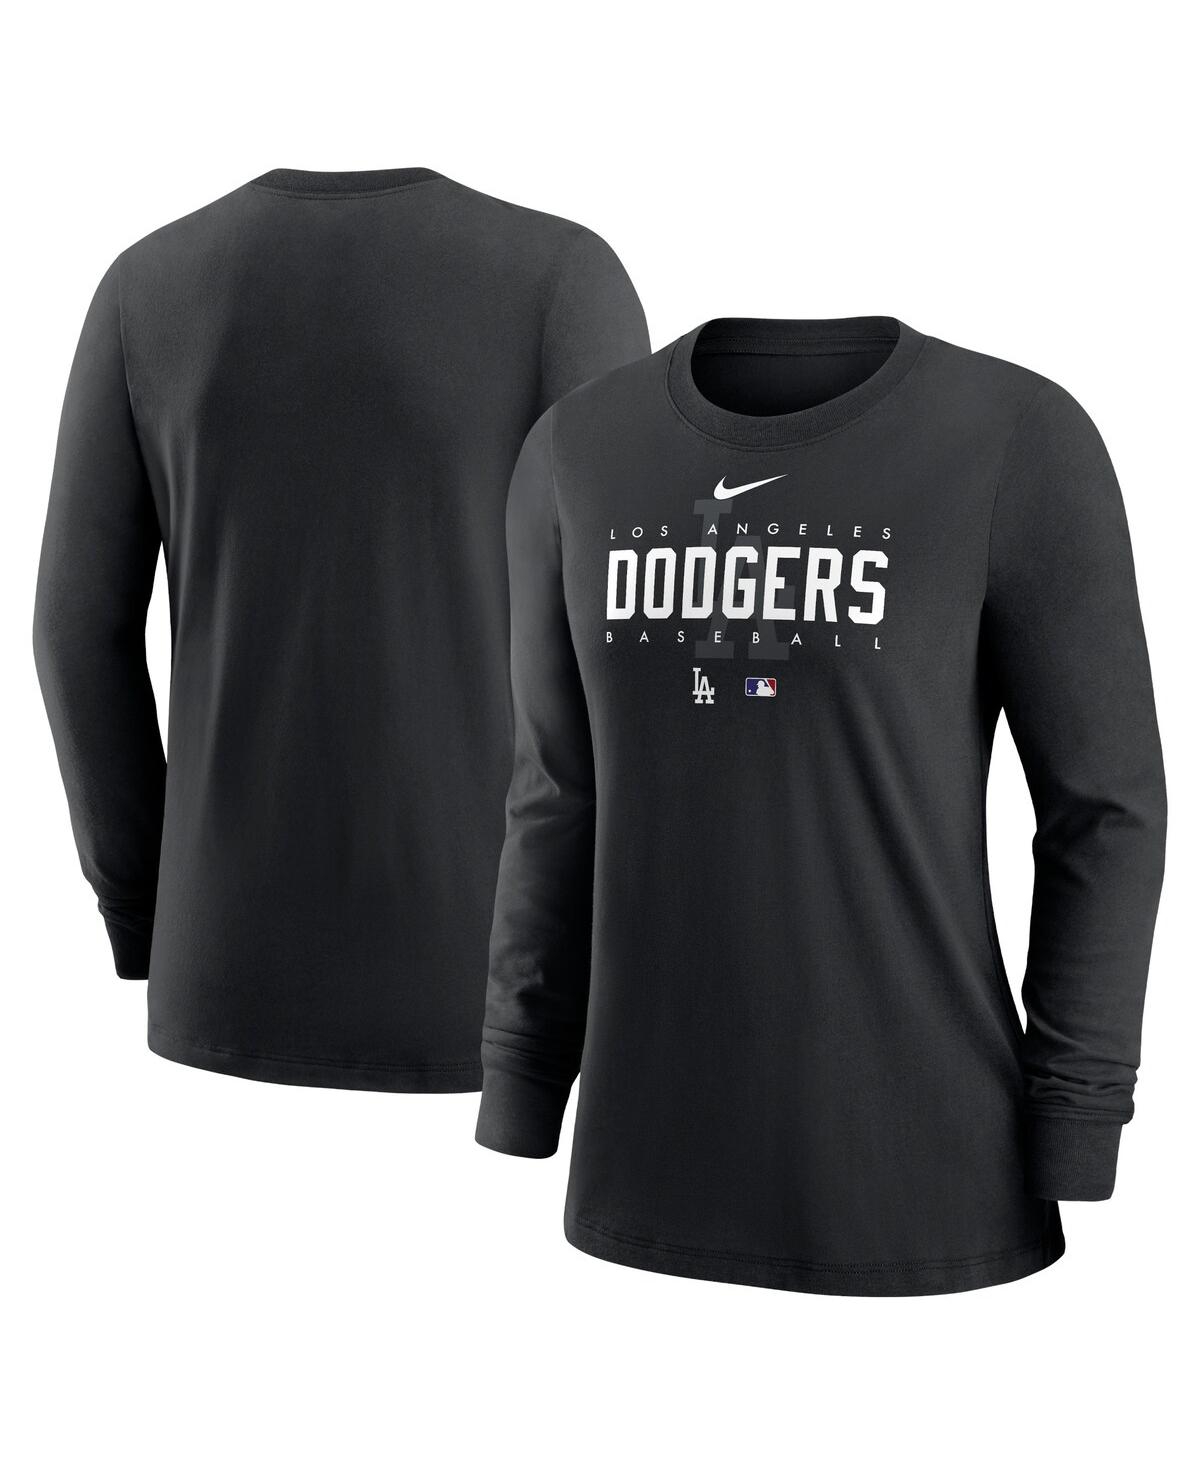 Women's Nike Black Los Angeles Dodgers Authentic Collection Legend Performance Long Sleeve T-Shirt